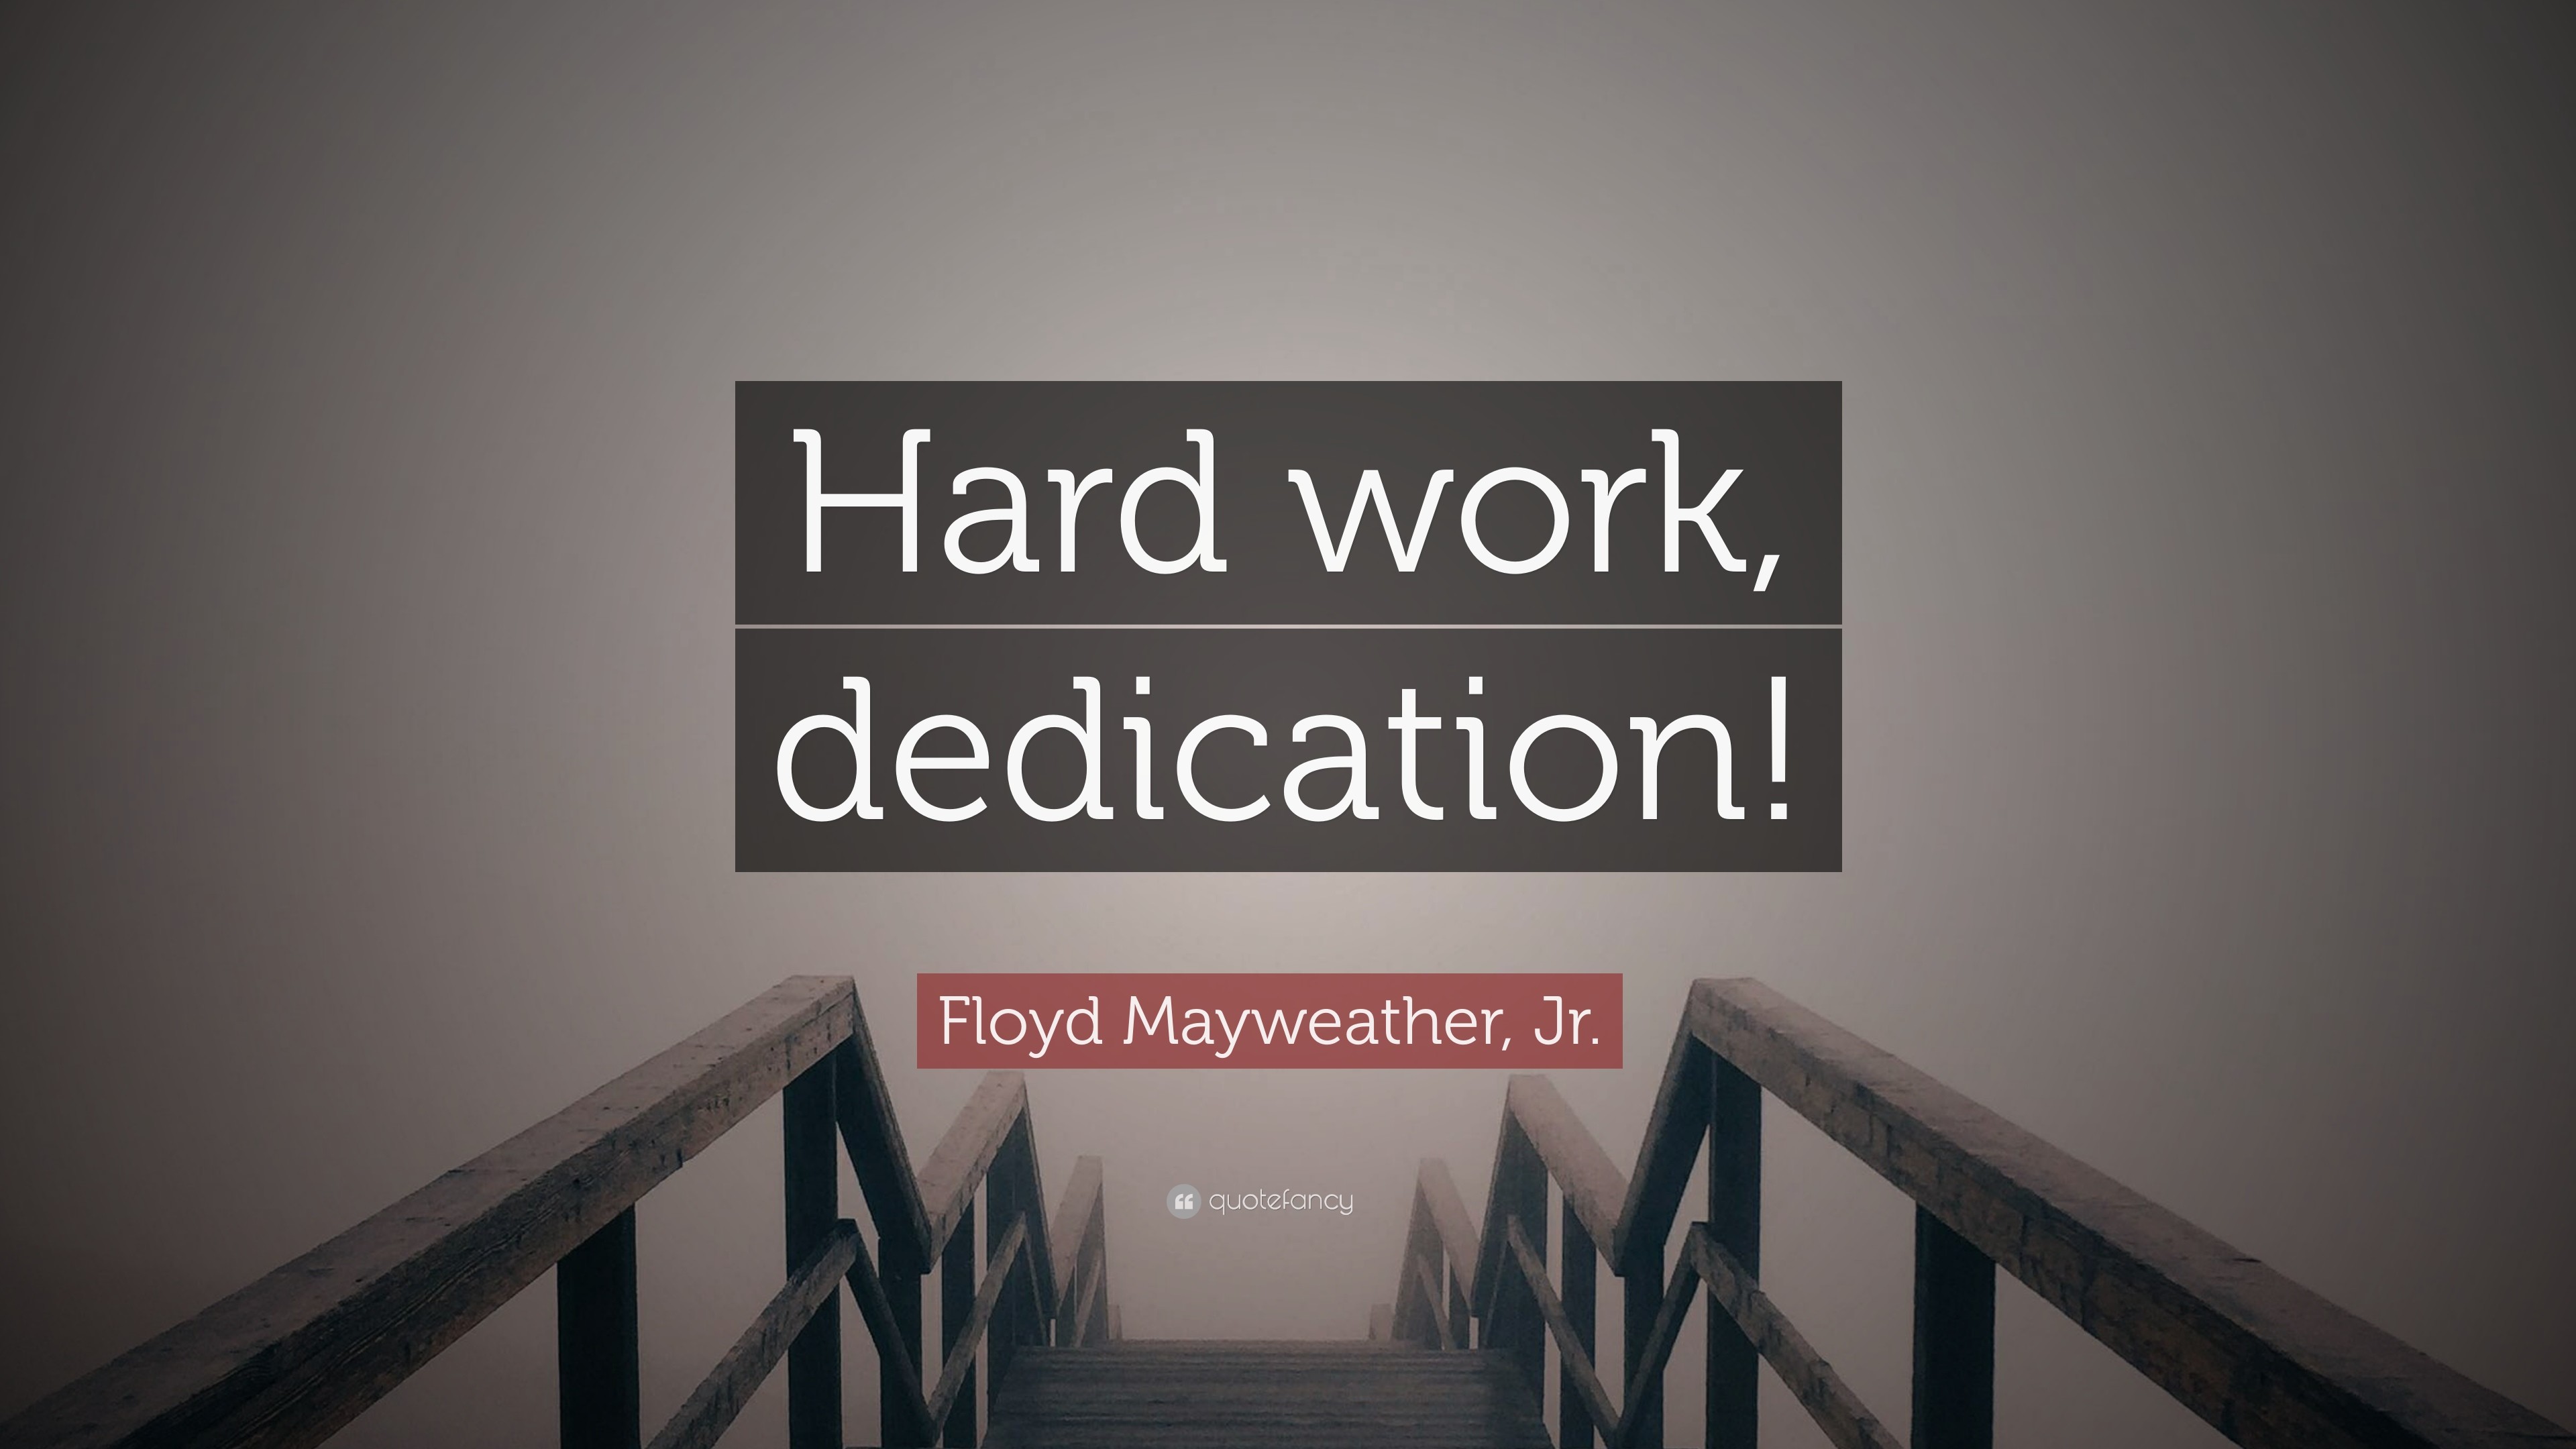 3840x2160 Floyd Mayweather, Jr. Quote: “Hard work, dedication!”